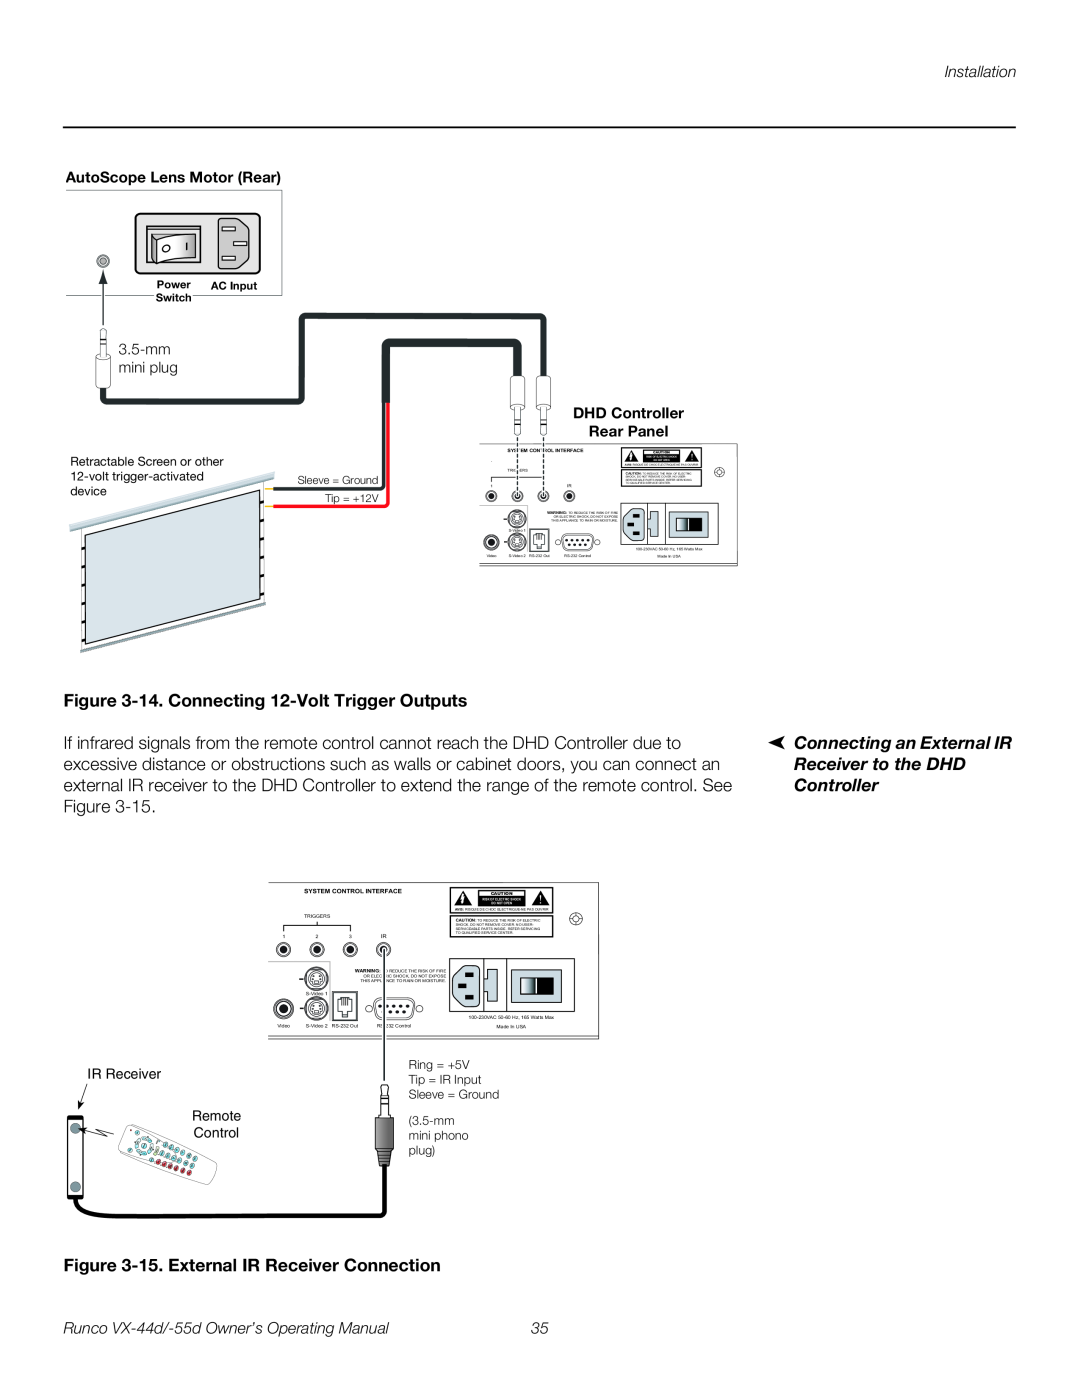 Runco VX-55D 14. Connecting 12-Volt Trigger Outputs, 15. External IR Receiver Connection, Installation, Remote, Control 